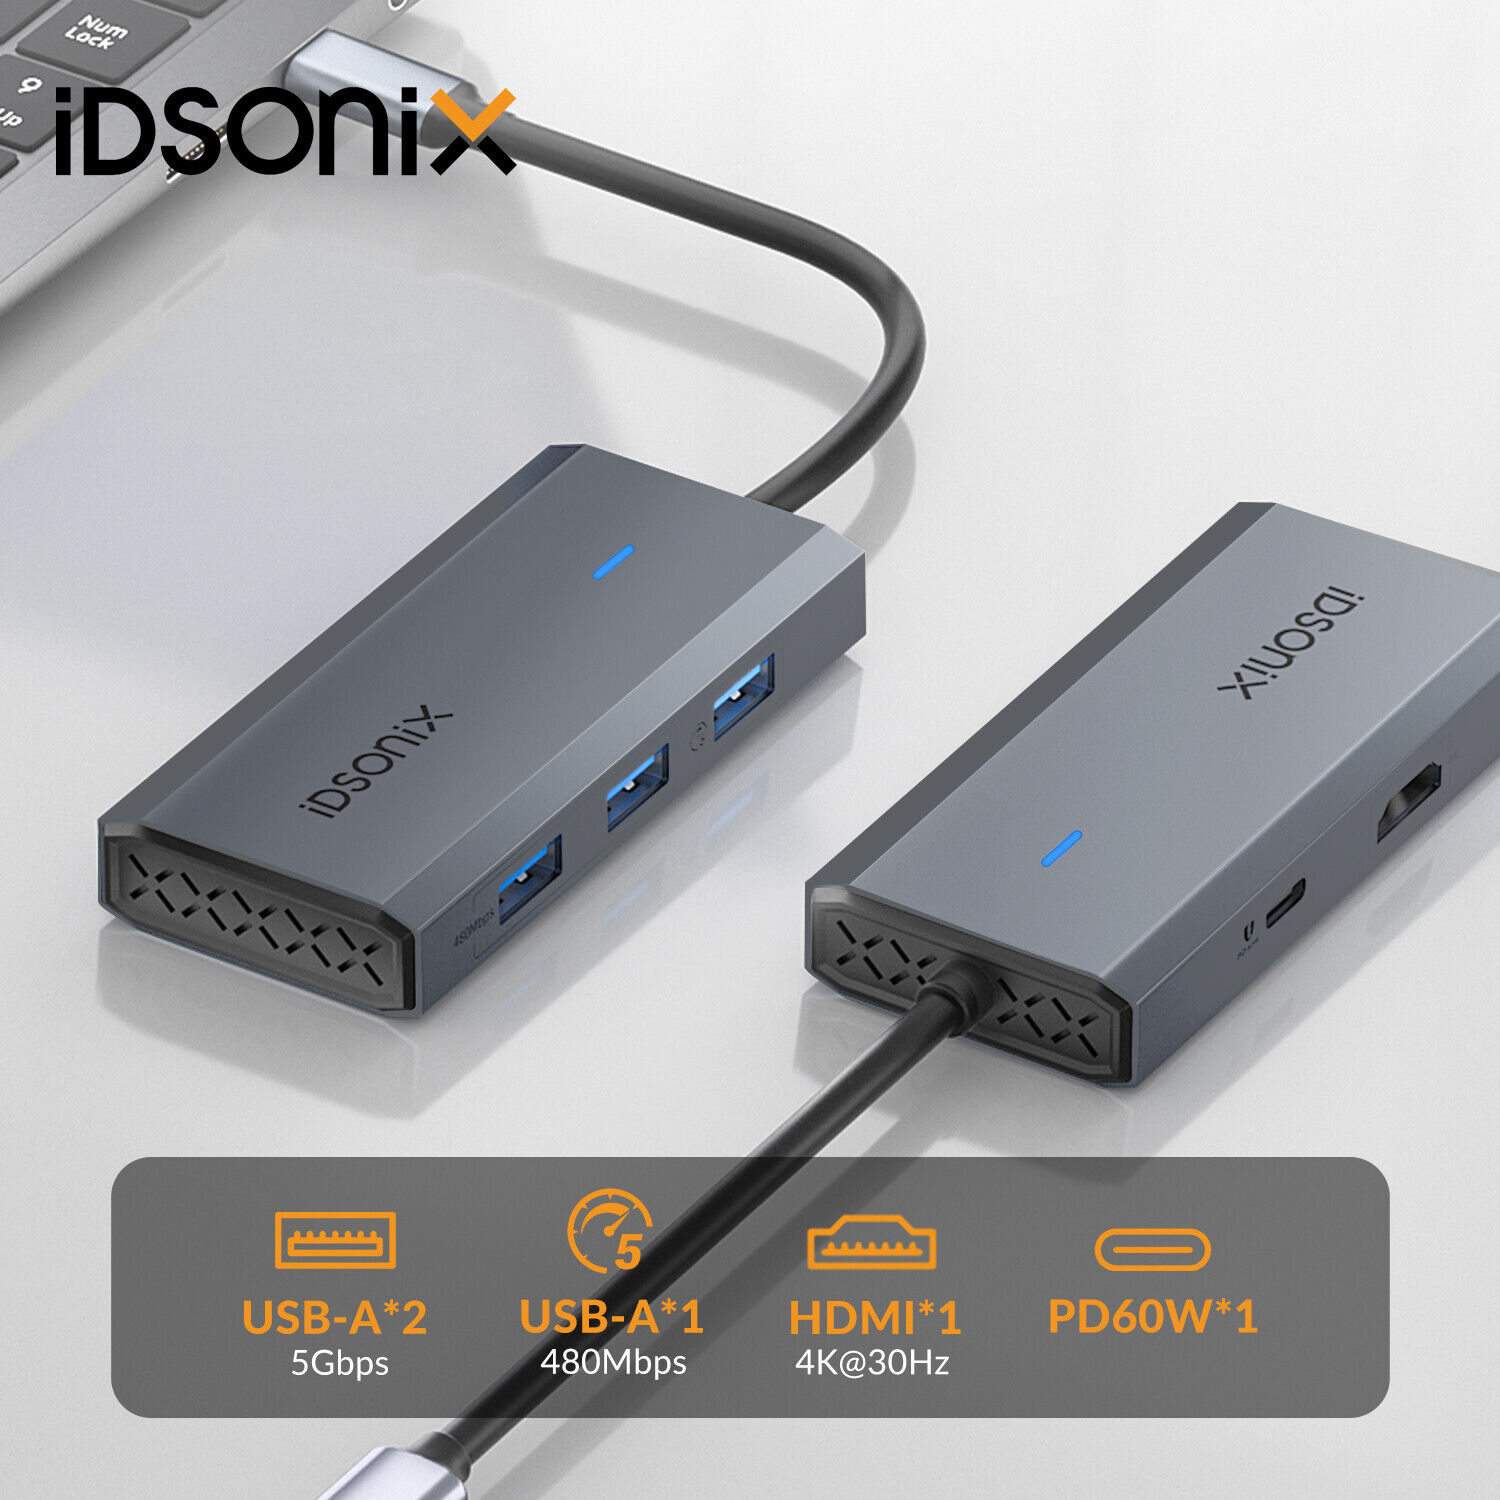 IDSONIX 5 in1 Type-C USB Hub 4K HDMI USB 3.0 / Adapter For Macbook Air/Pro Gray